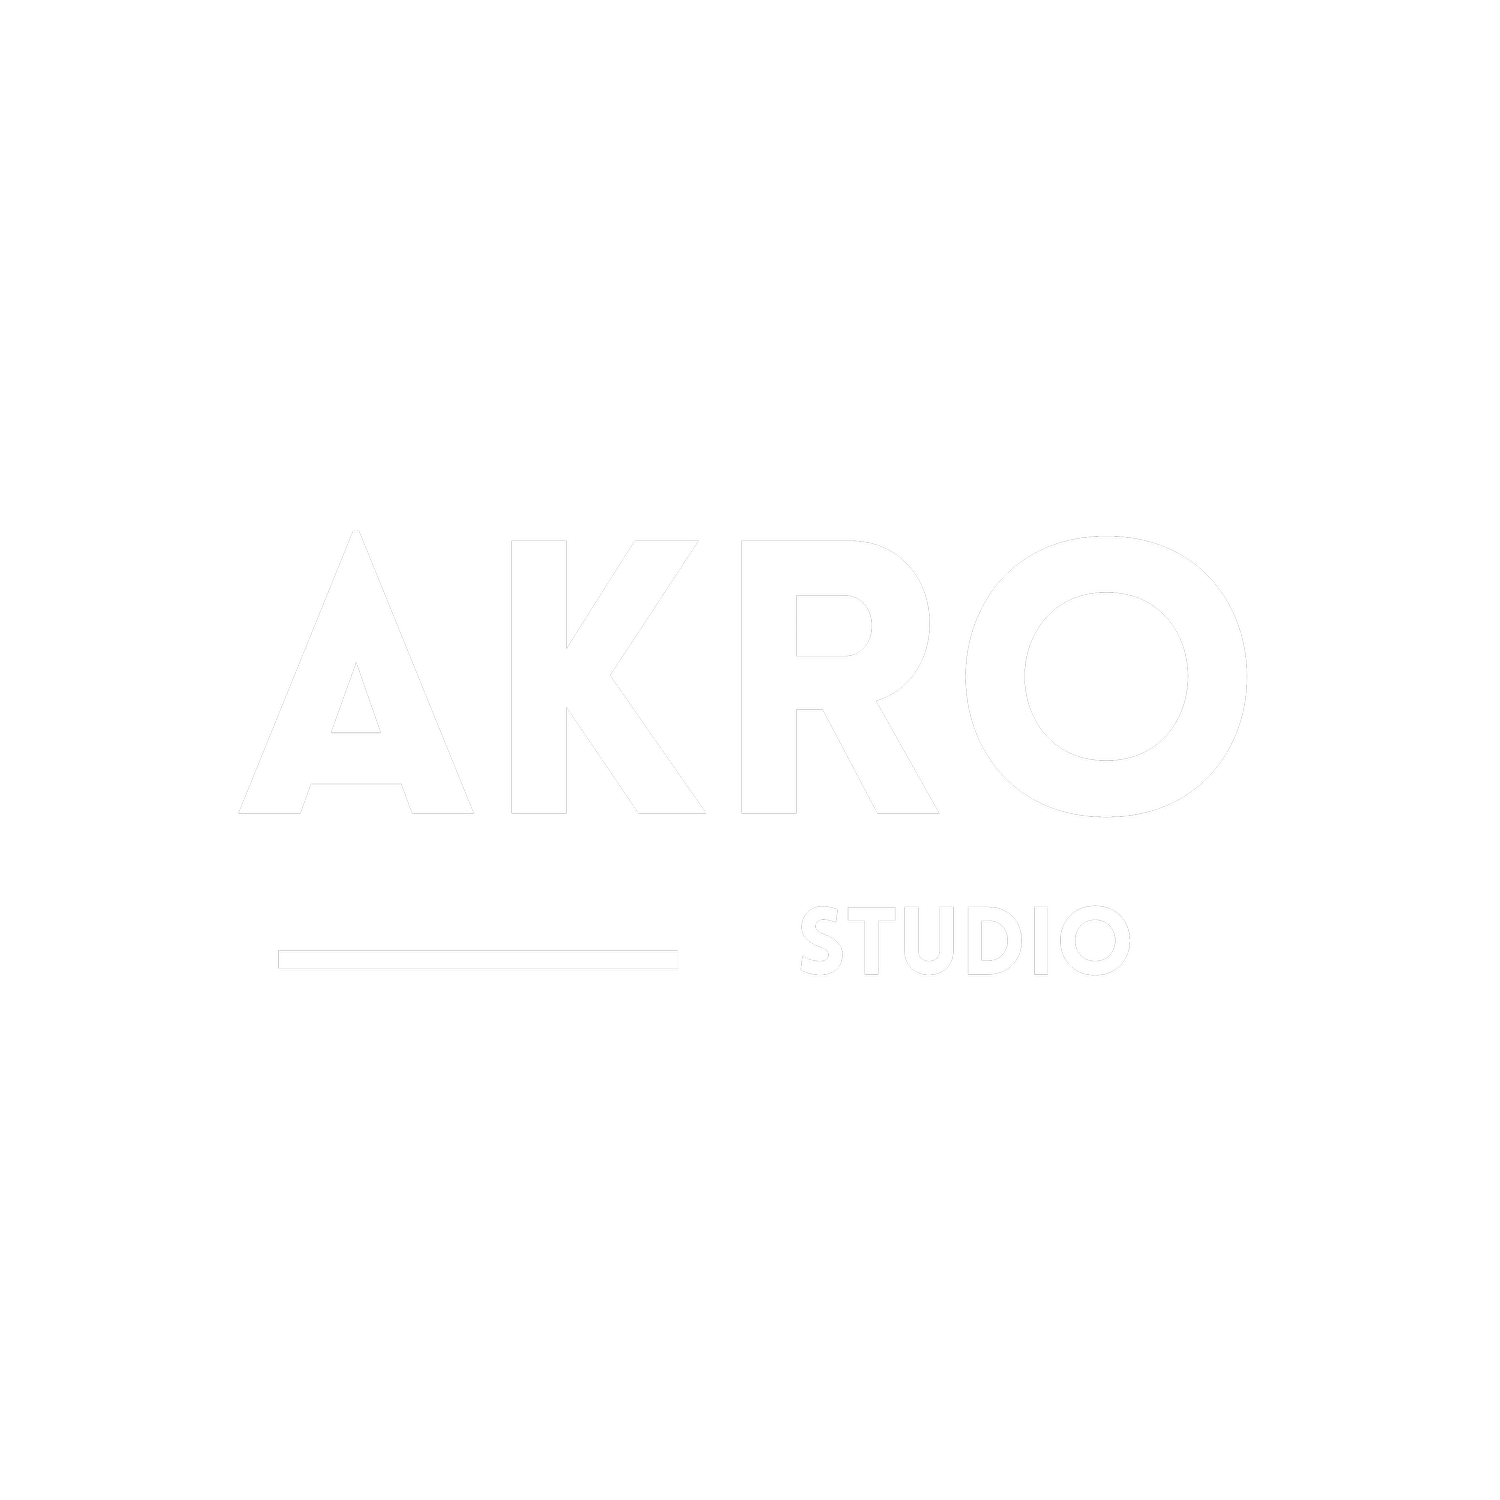 AKRO Studio